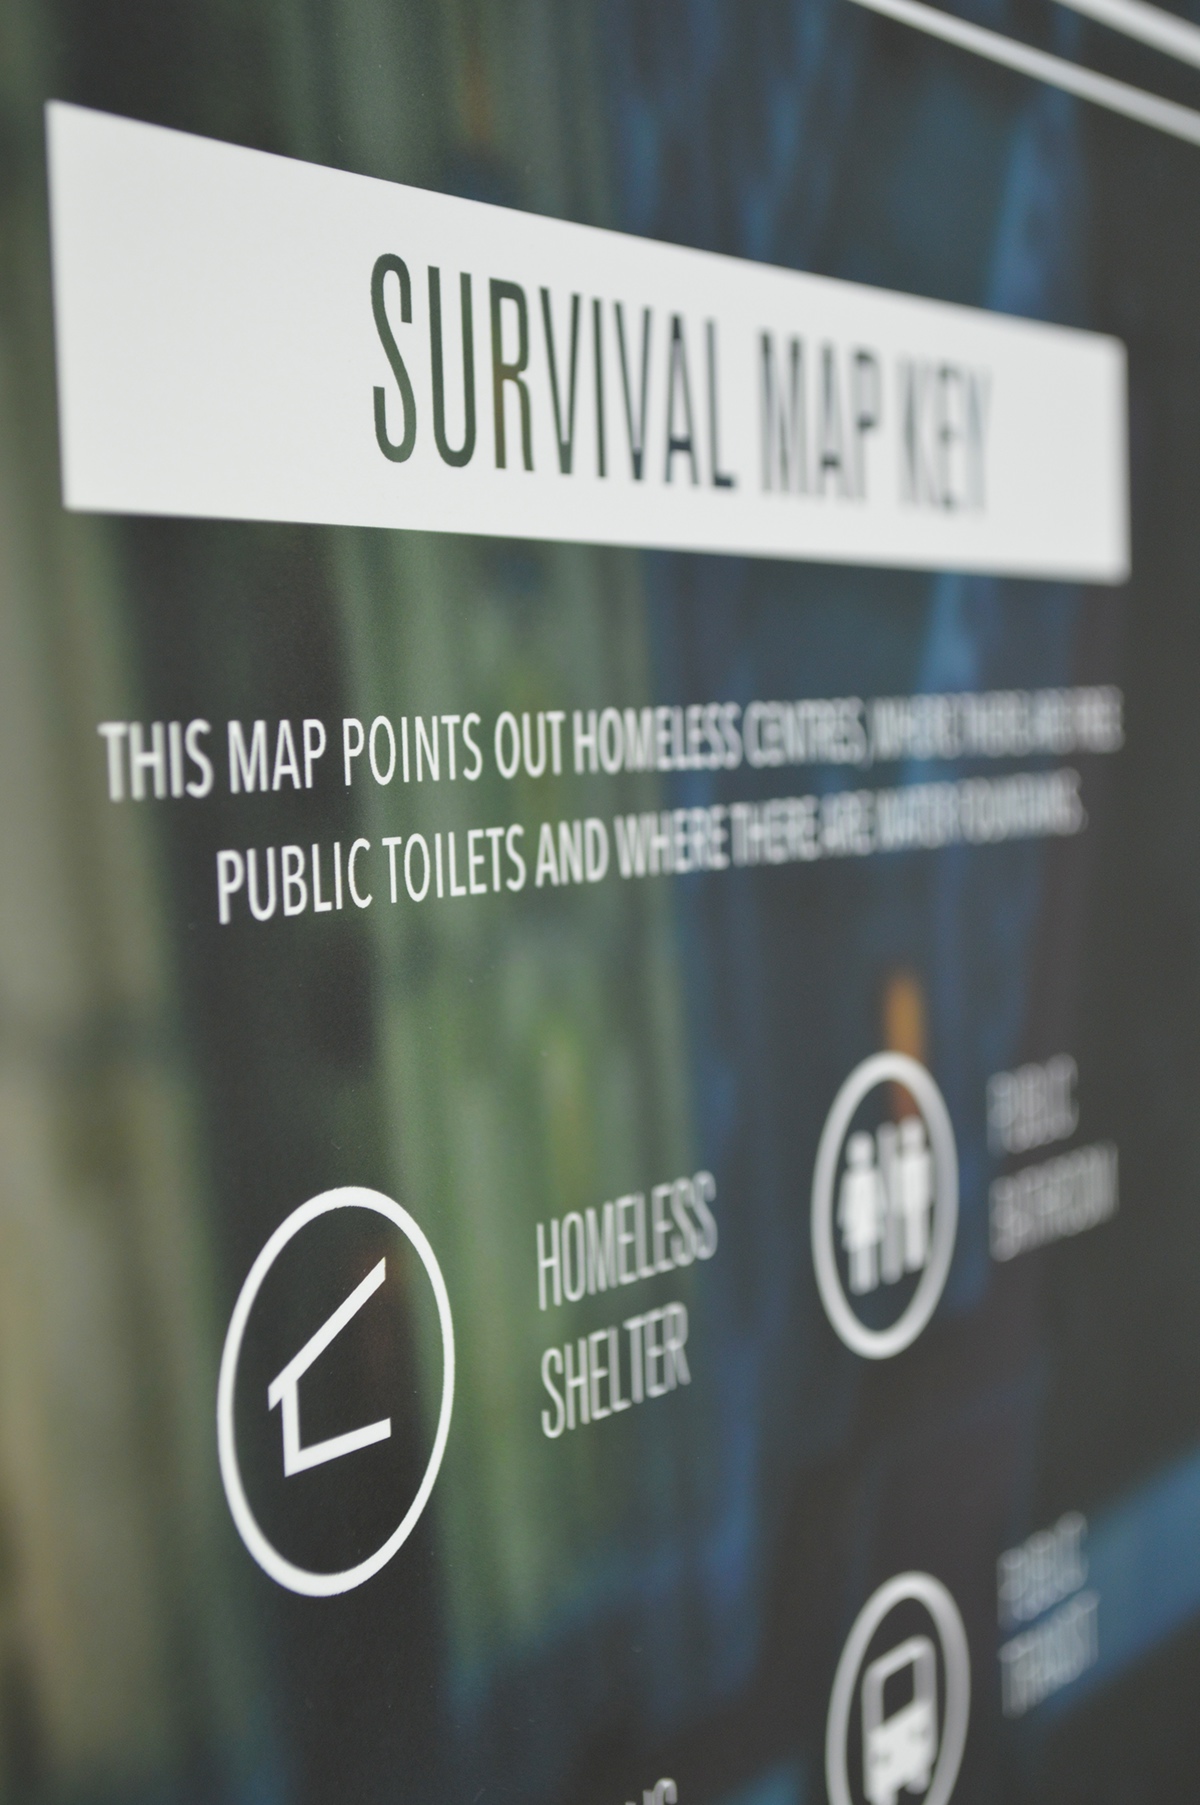 Hobo  Homeless   survival guide  exhibit info informationdesign  infographics